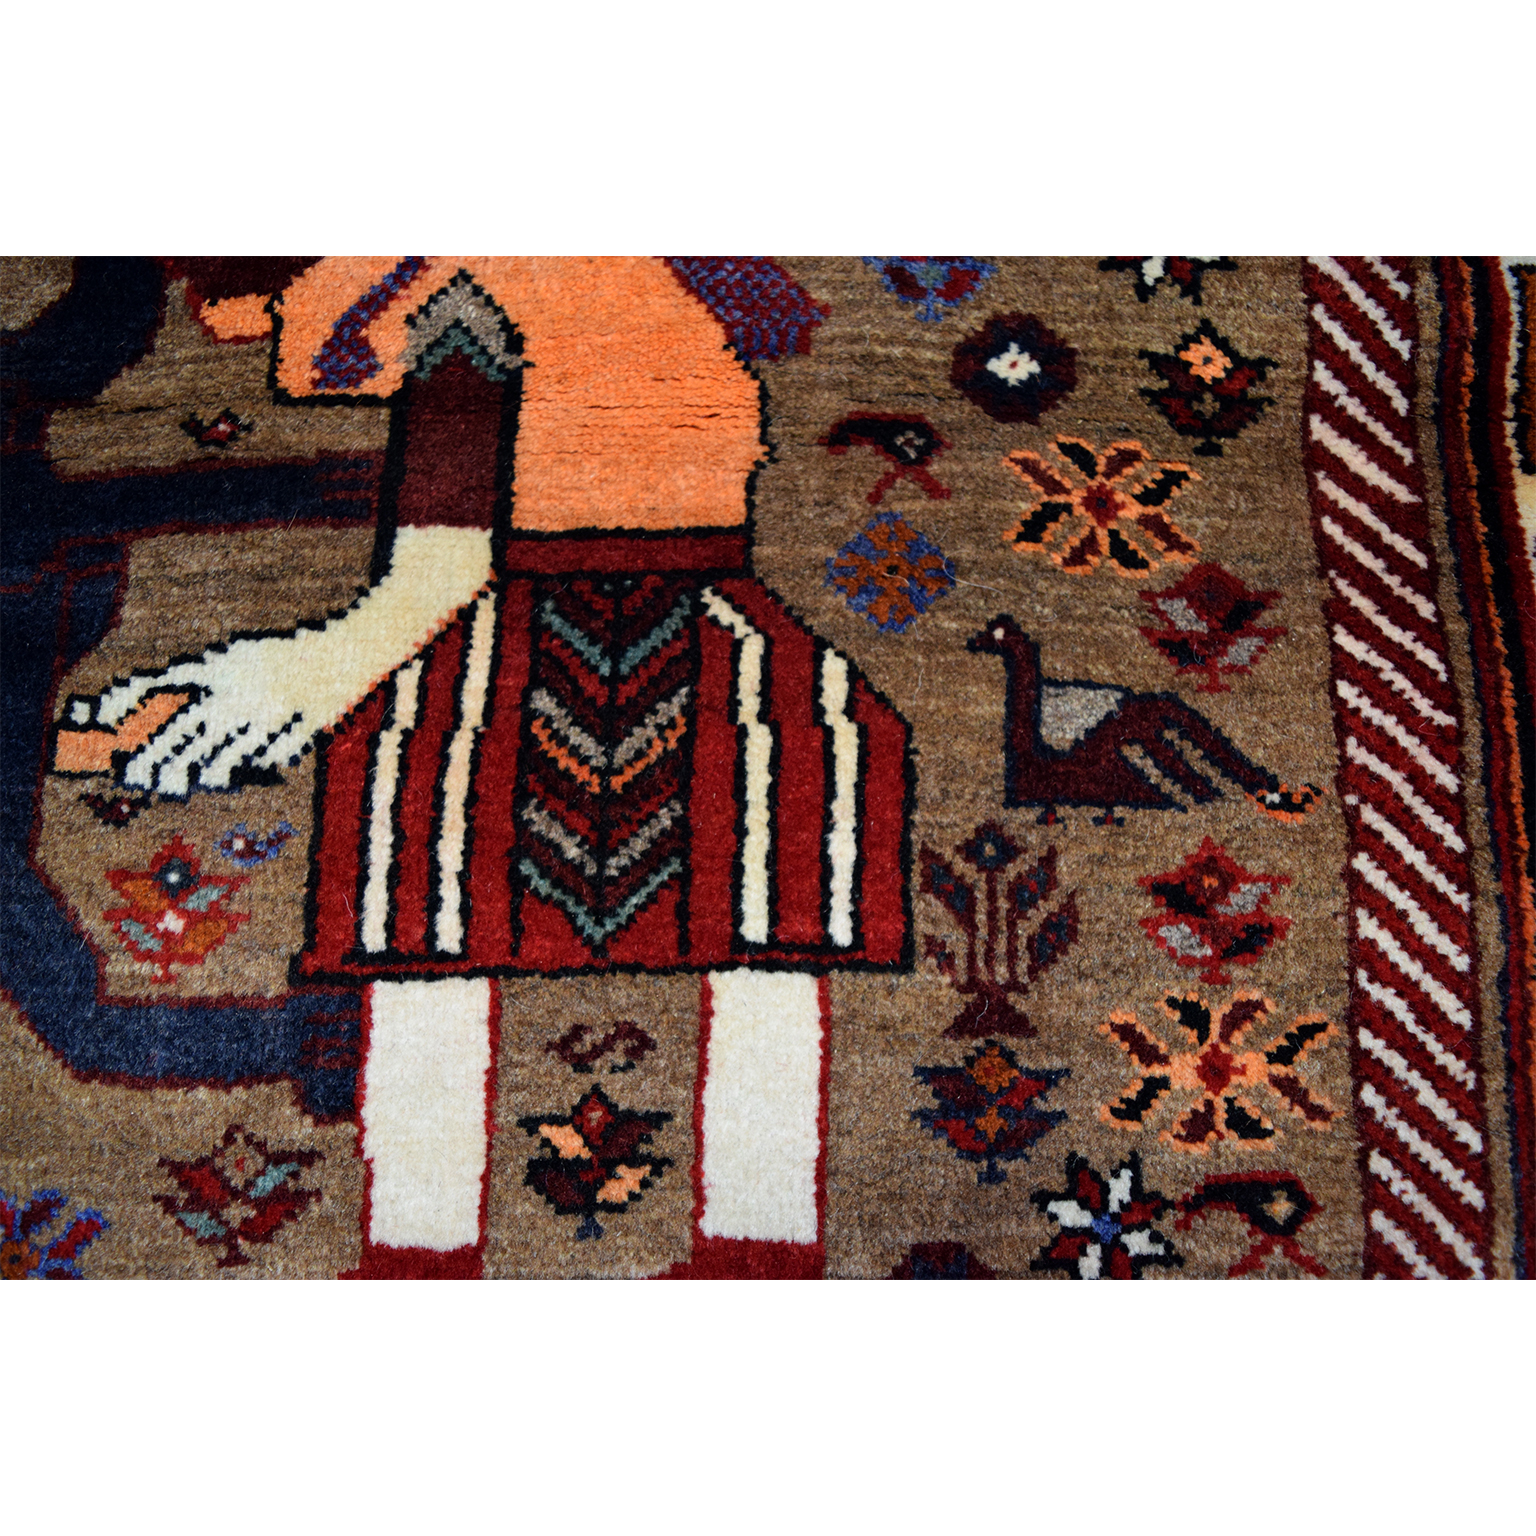 3' x 5' Persian Qashqai Carpet Featuring King Bahram vs. The Lion detail photo of Bahram